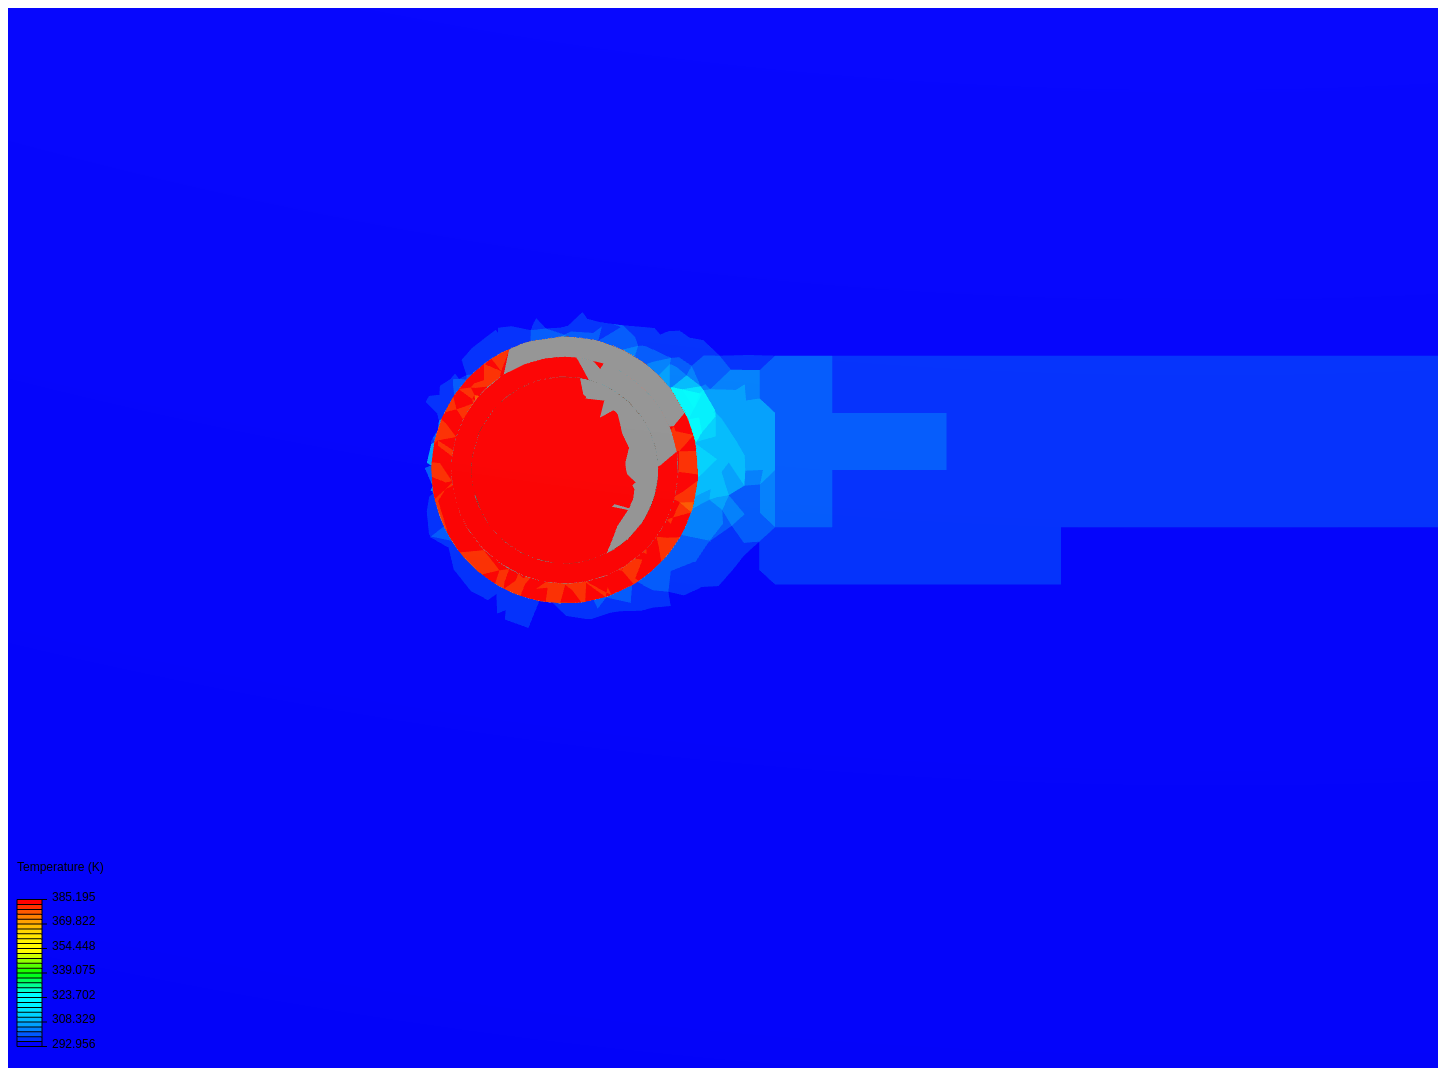 A resistor's thermal simulation image